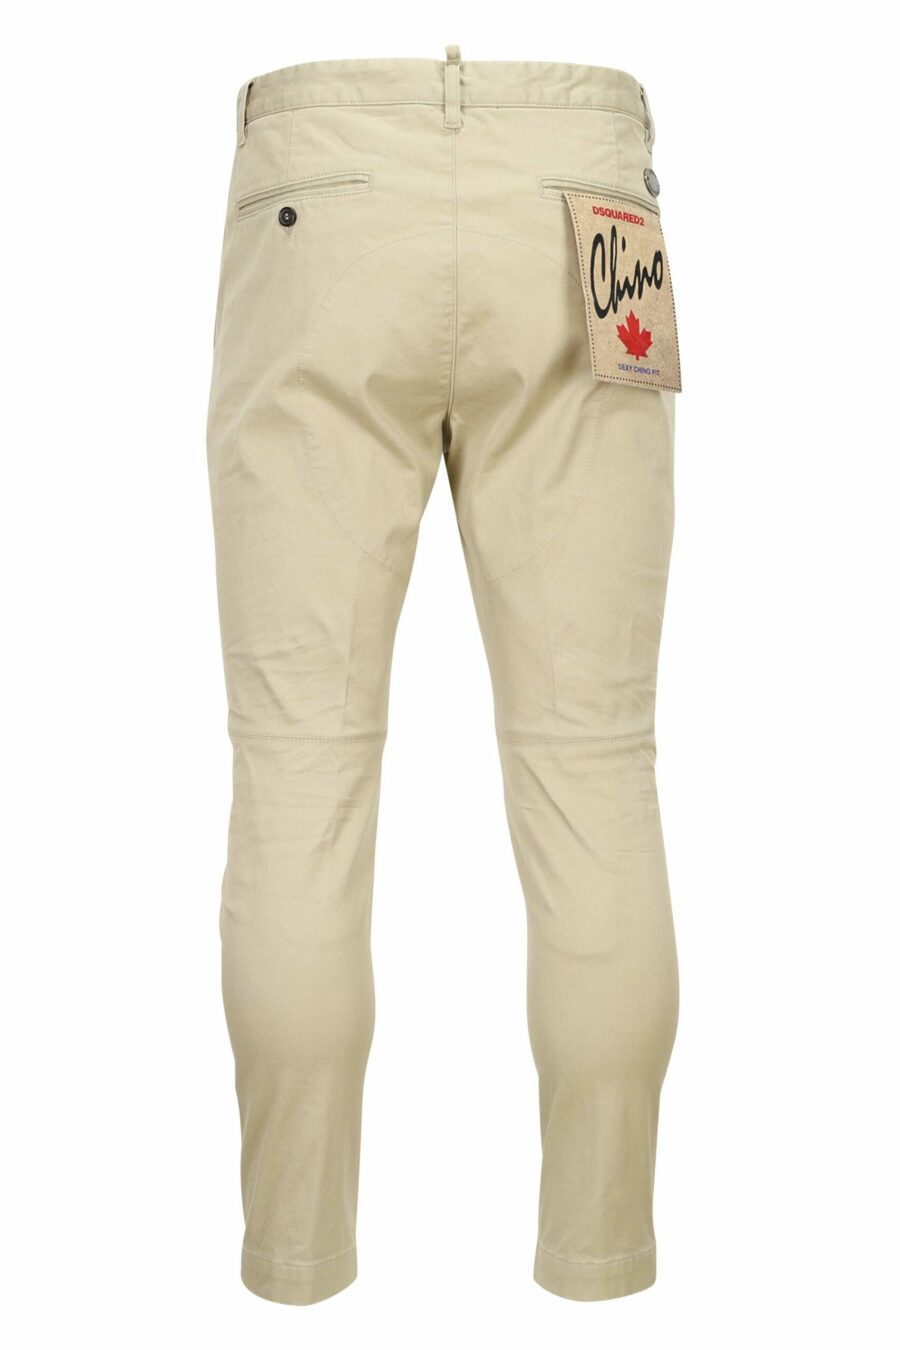 Pantalón beige "sexy chino pant" con minilogo - 8052134973257 2 scaled